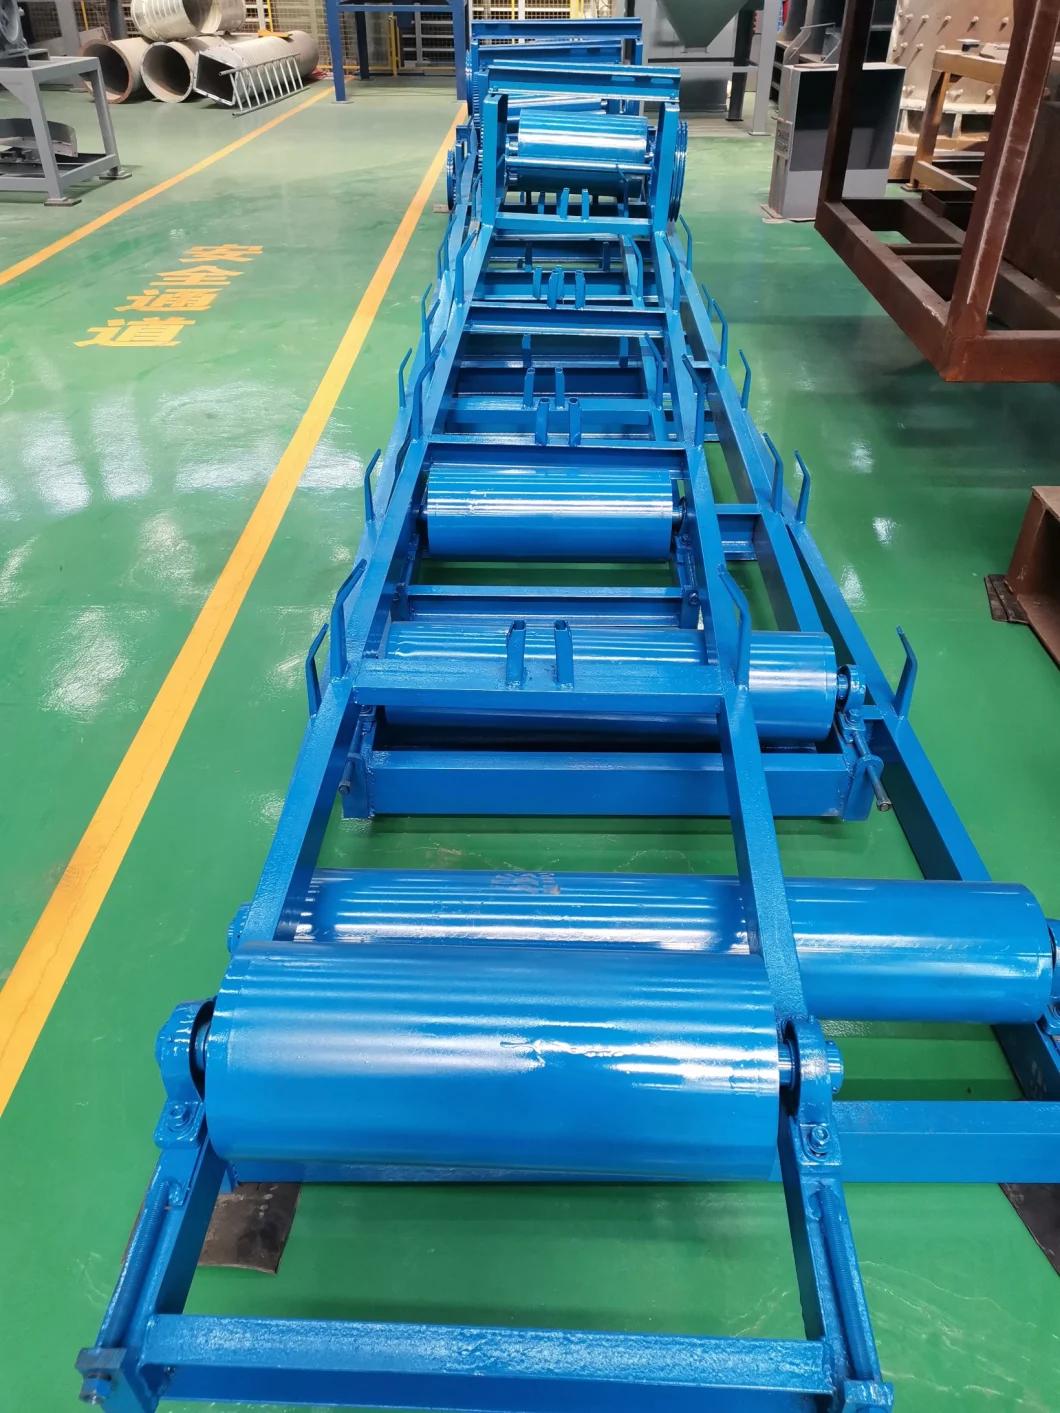 Width 800mm Low Cost Portable Rubber Belt Conveyor Price, Iron Ore Conveyor Belt